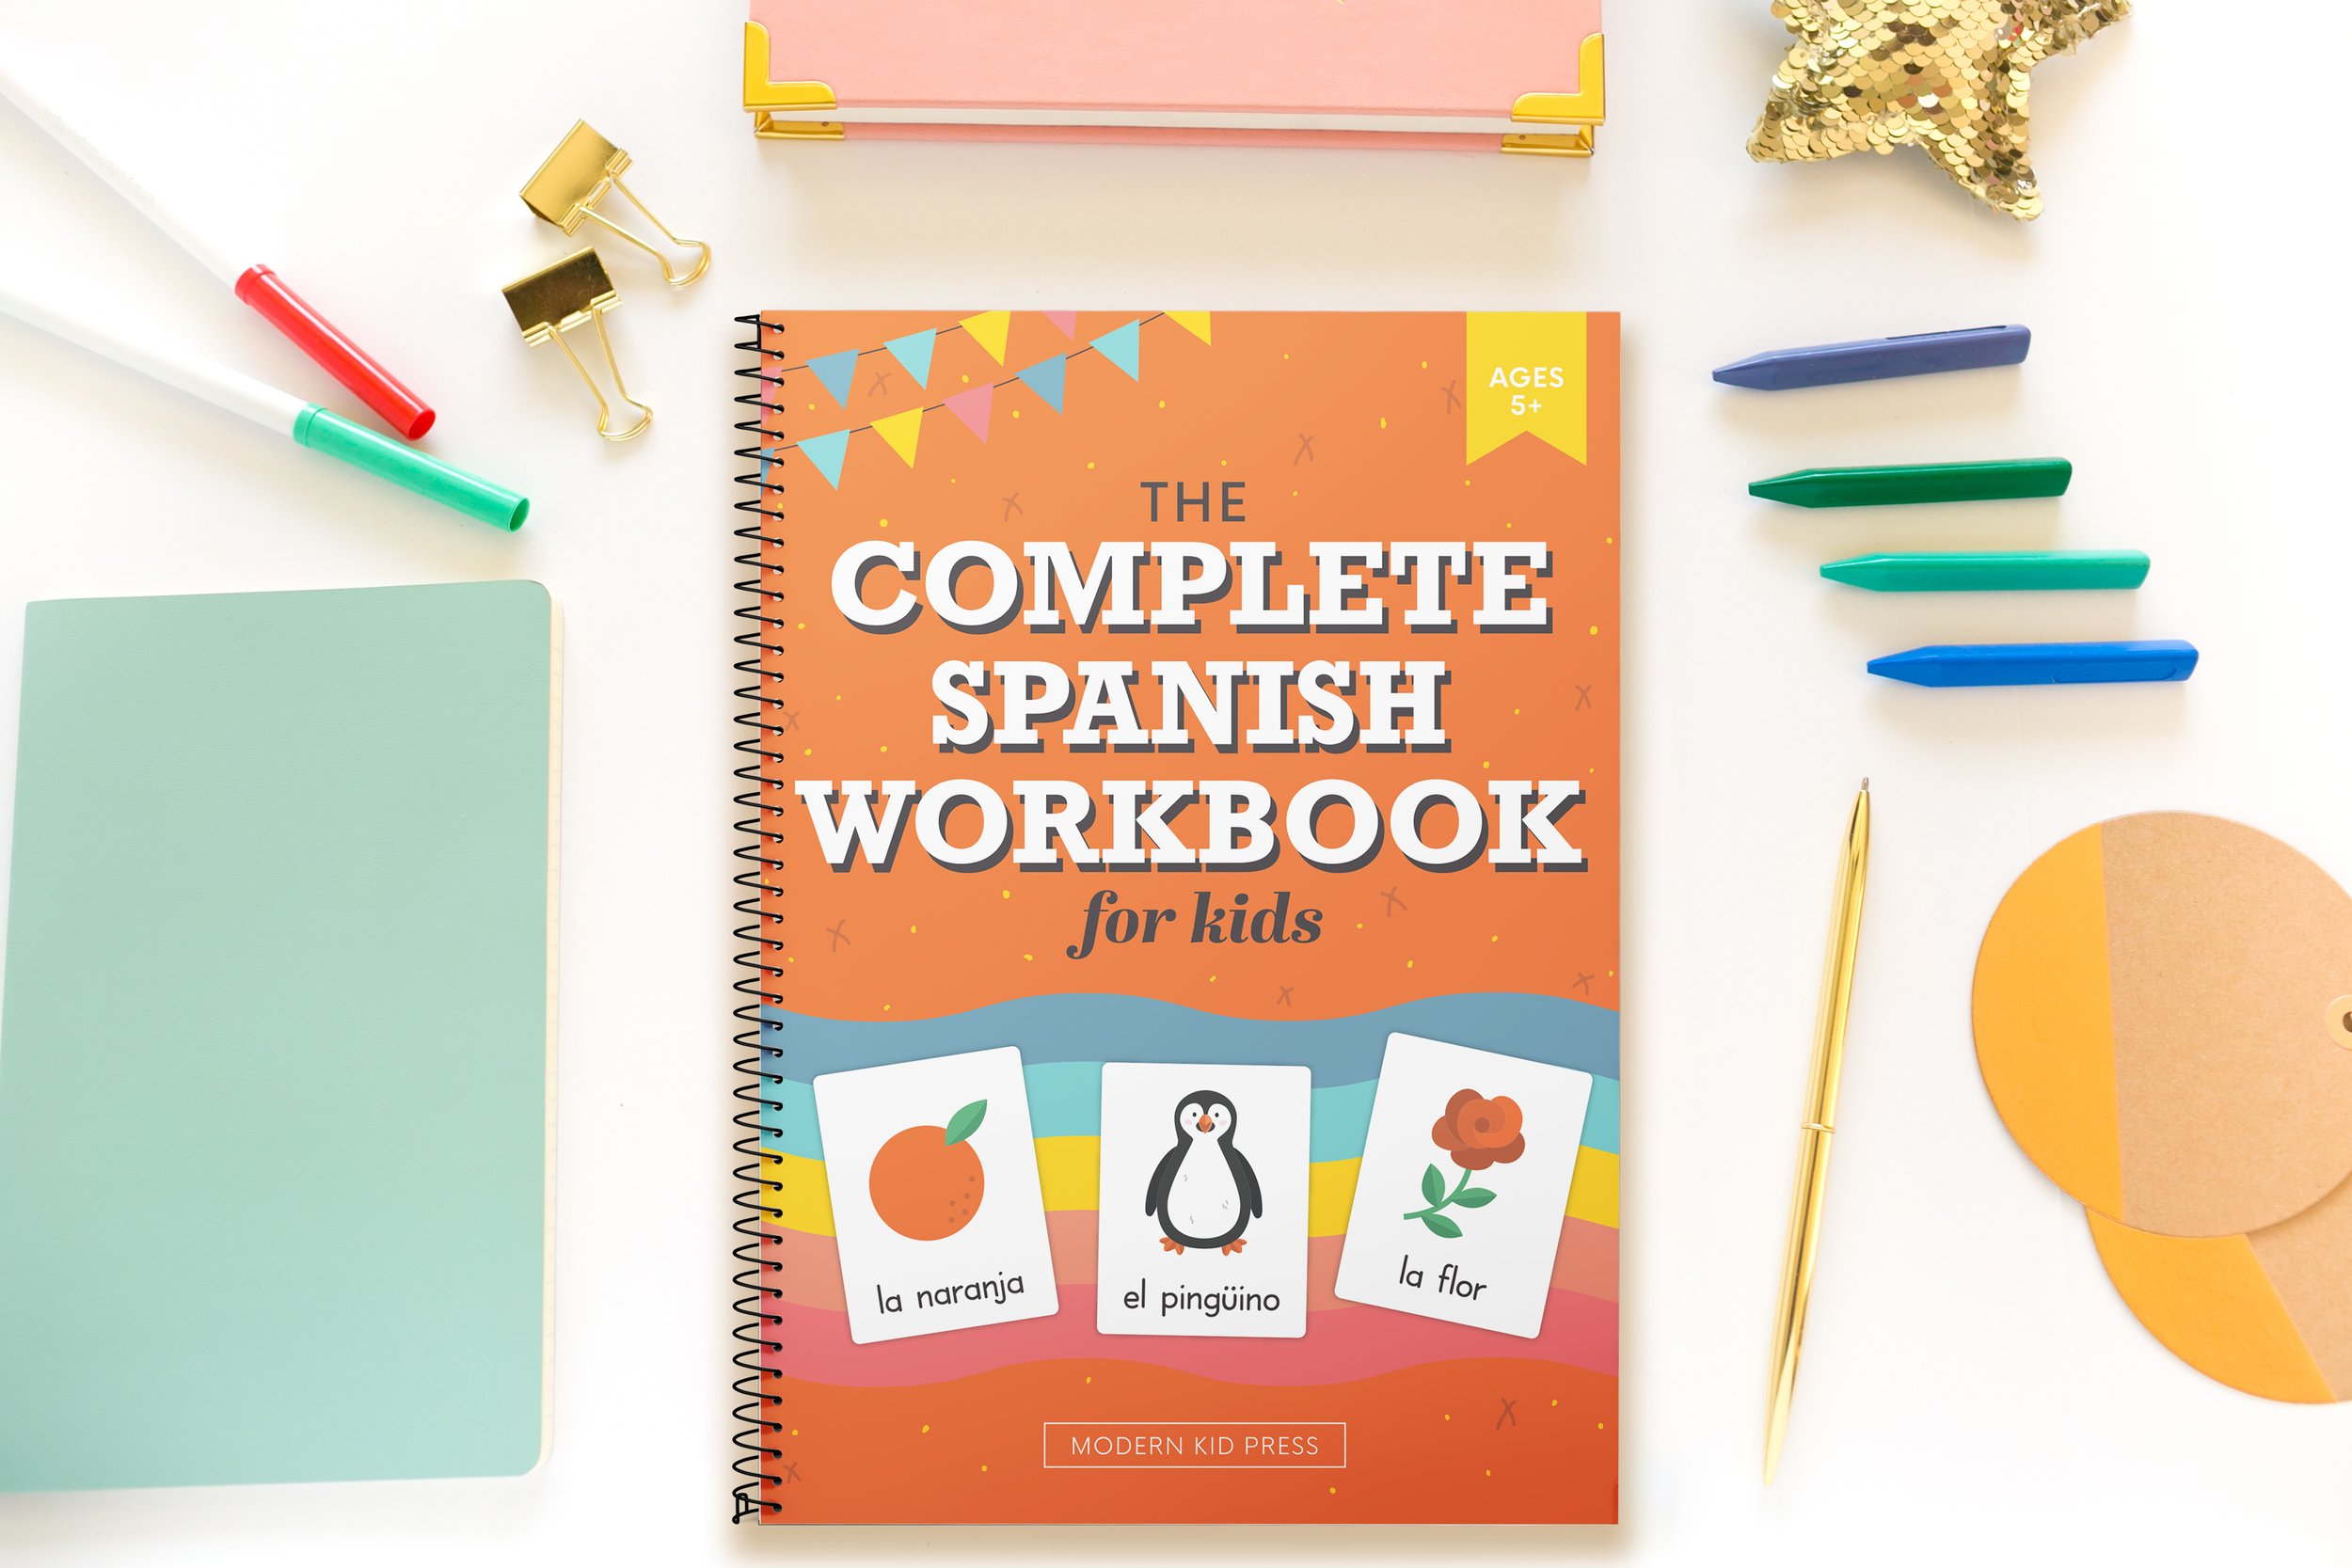 Complete Spanish Workbook for Kids - 1.jpg